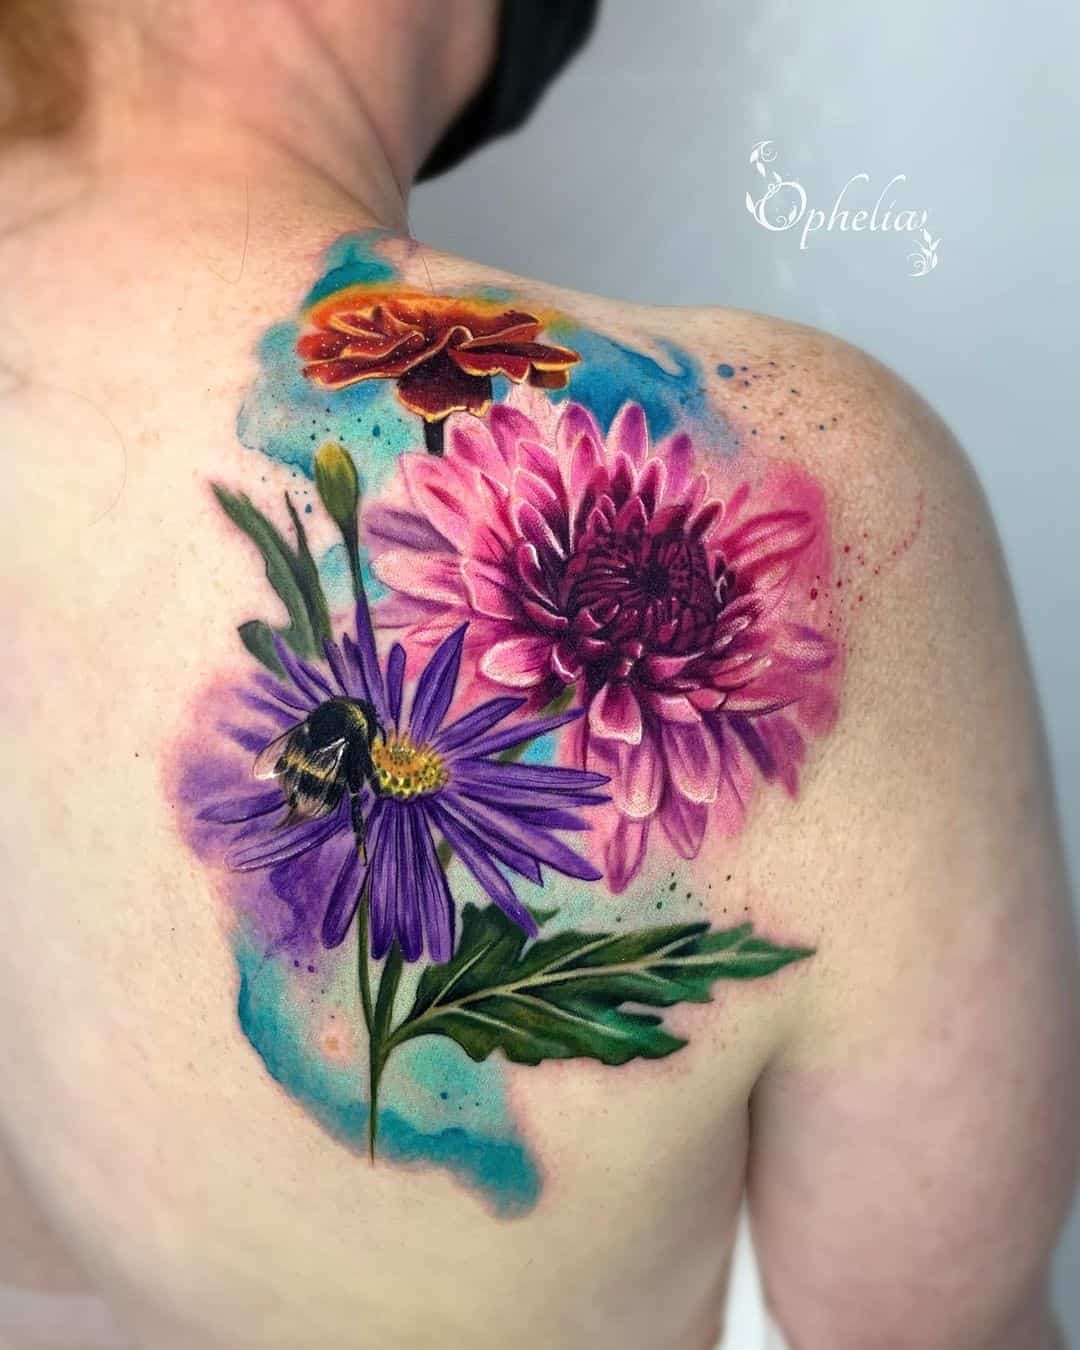 Tatuaje de flor de nacimiento de aster tatuaje grande en la espalda 